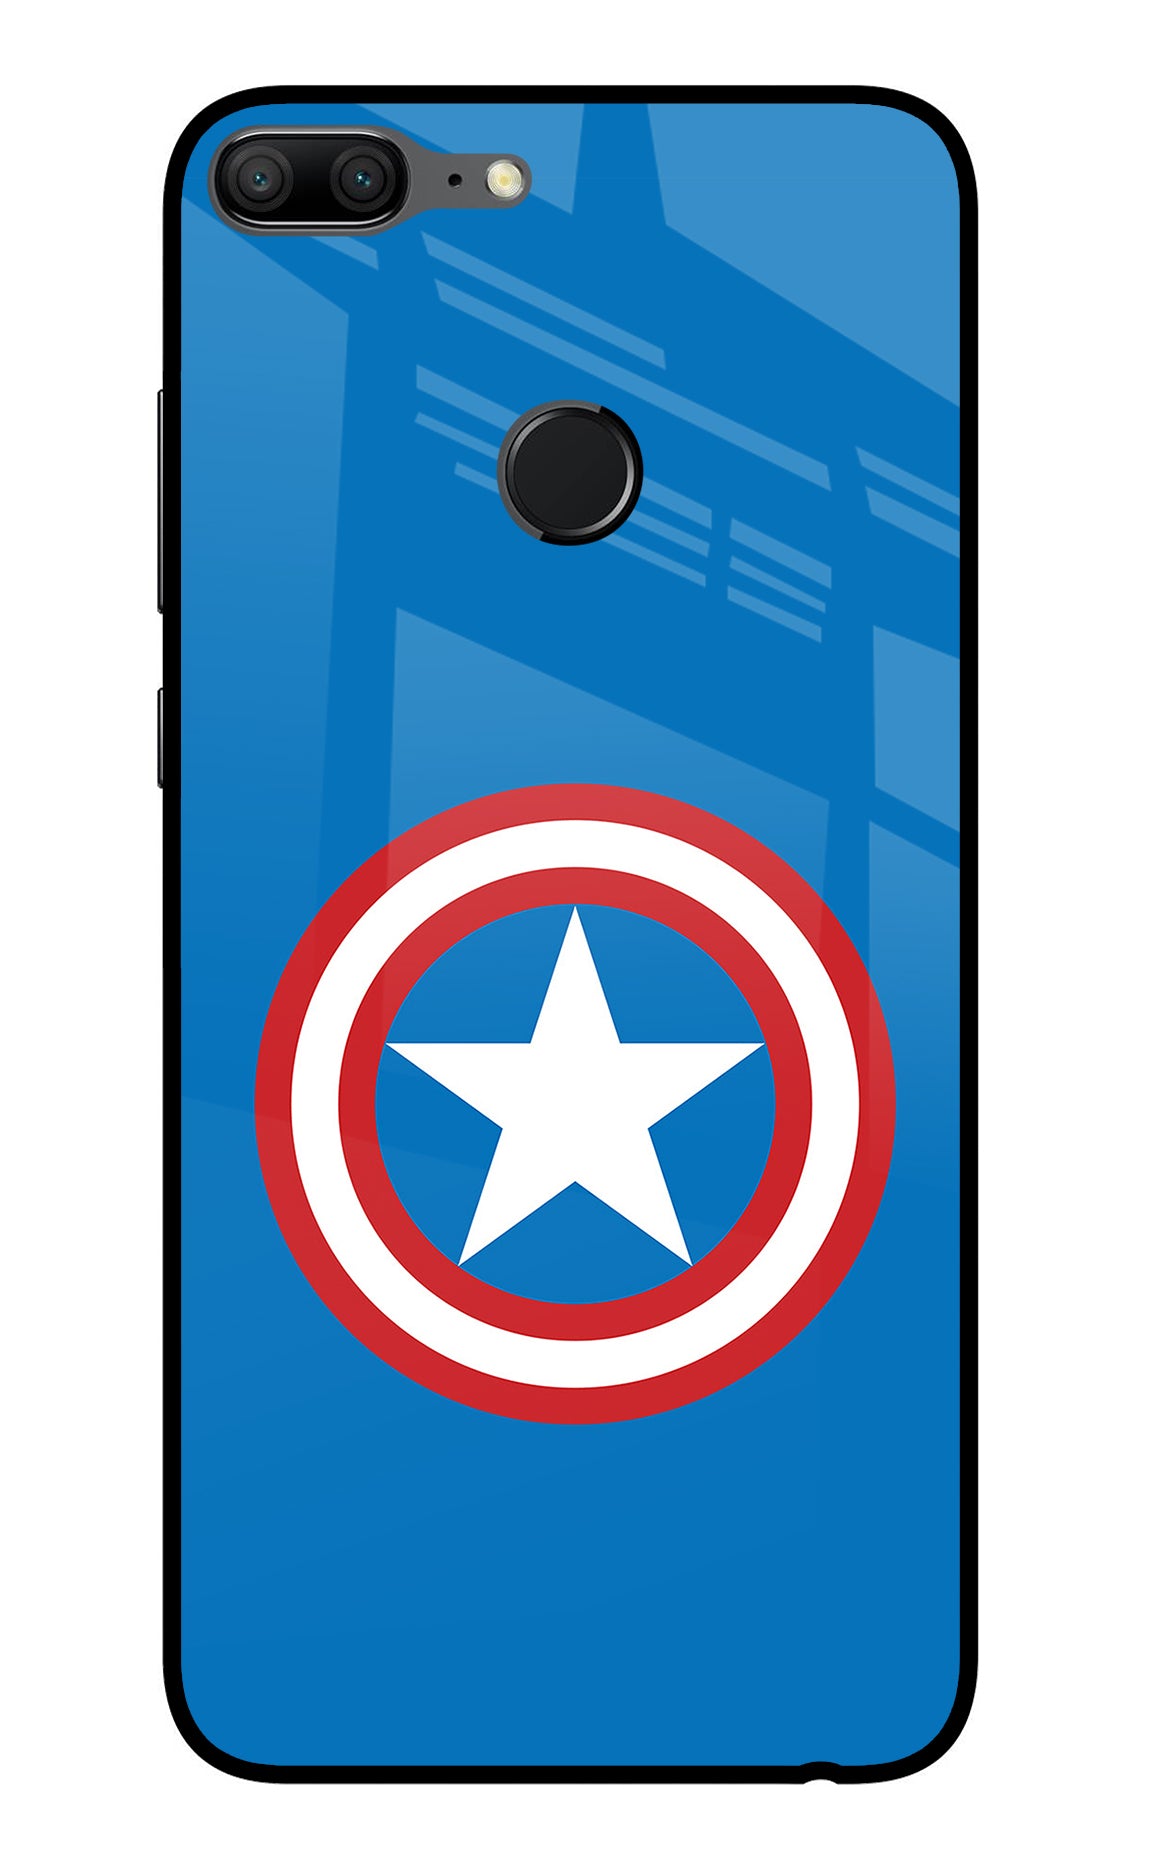 Captain America Logo Honor 9 Lite Back Cover